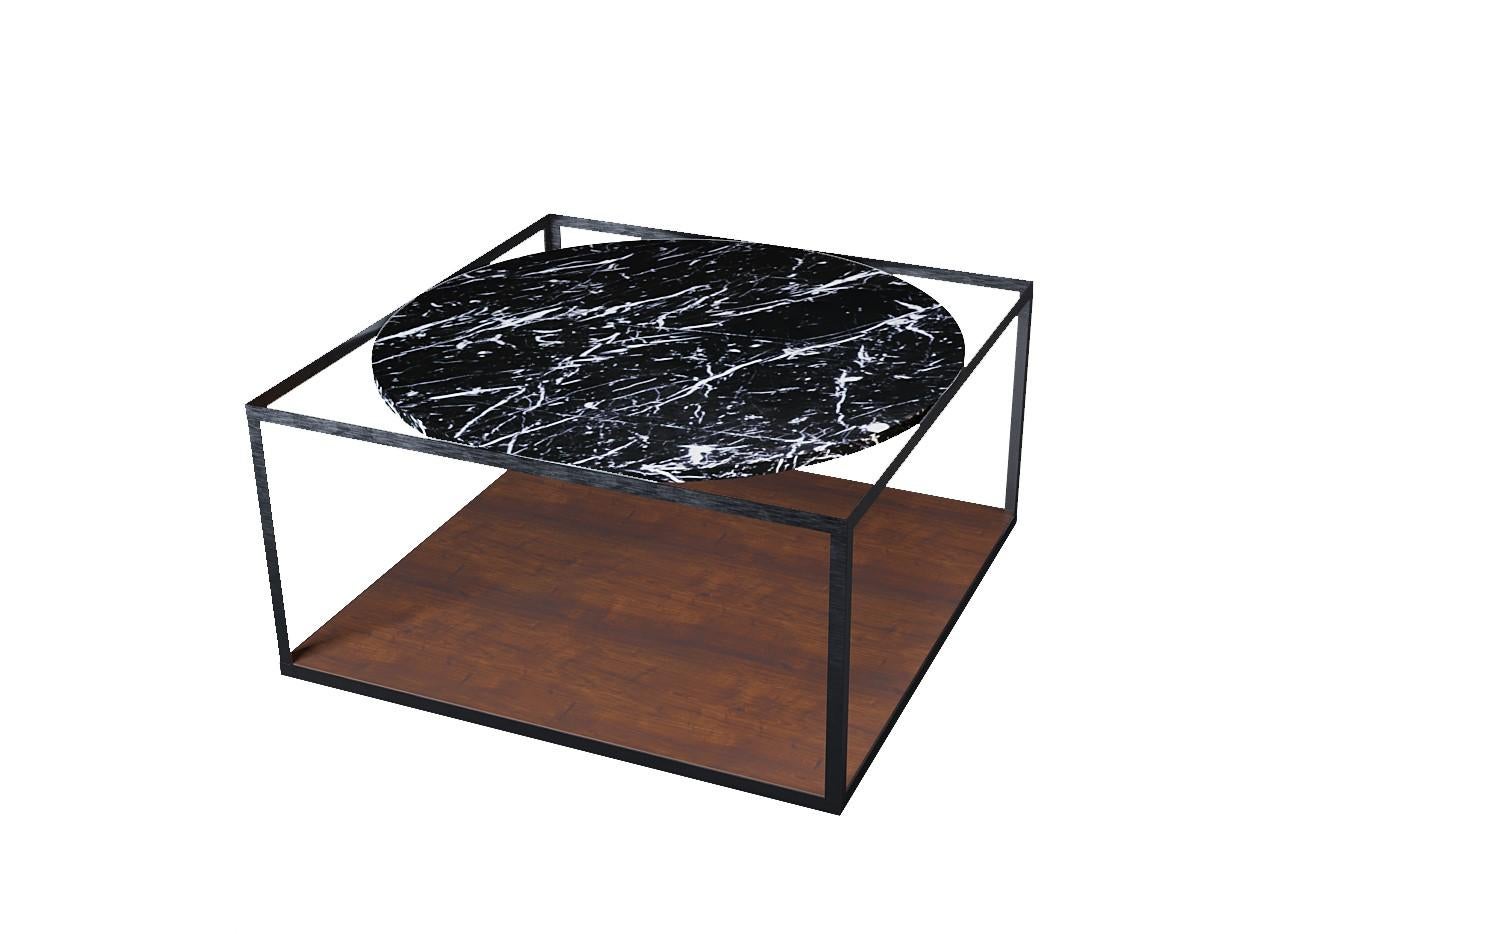 Scandinavian Modern NORDST GAARD Coffee Table, Italian White Mountain Marble, Danish Modern Design For Sale